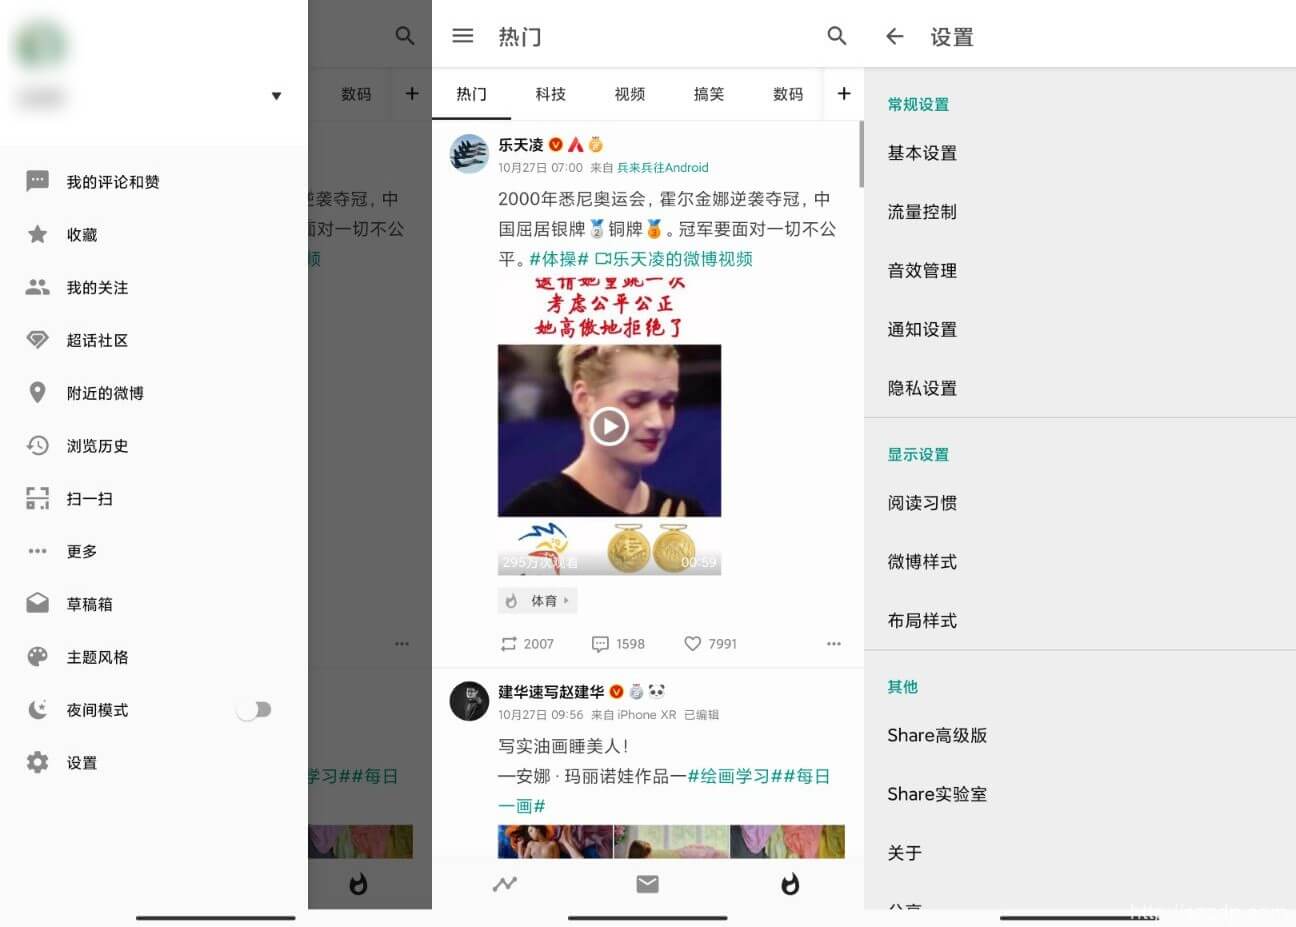 Share微博客户端 v3.7.9 中文高级版 第三方新浪微博客户端